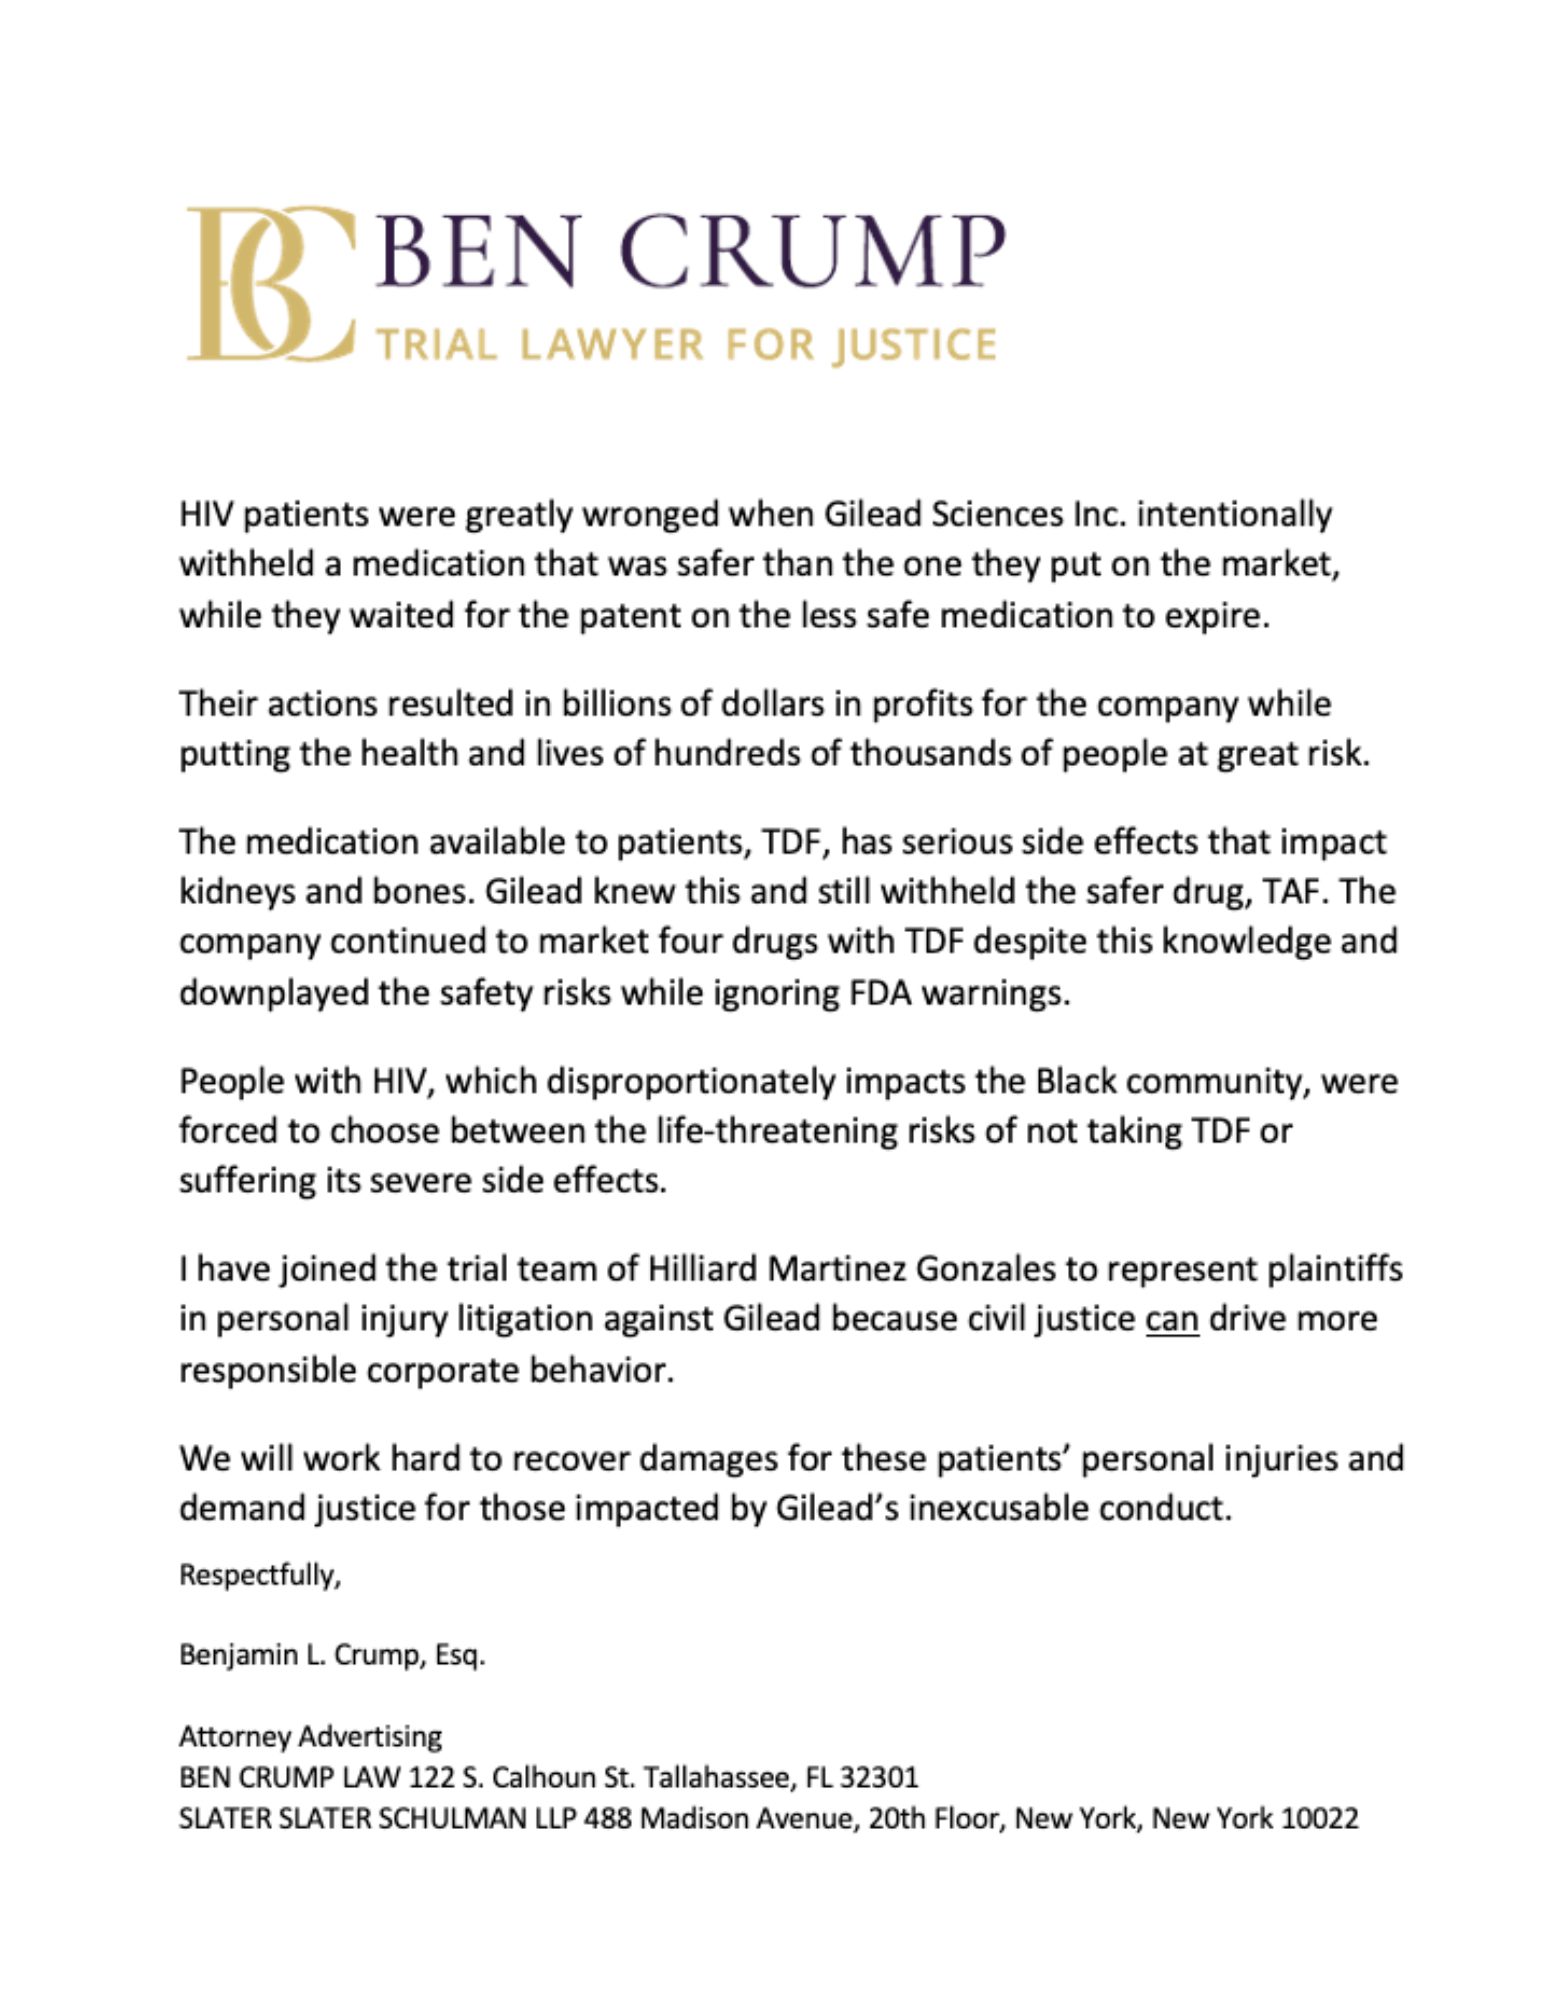 Ben Crump Press Release - Gilead